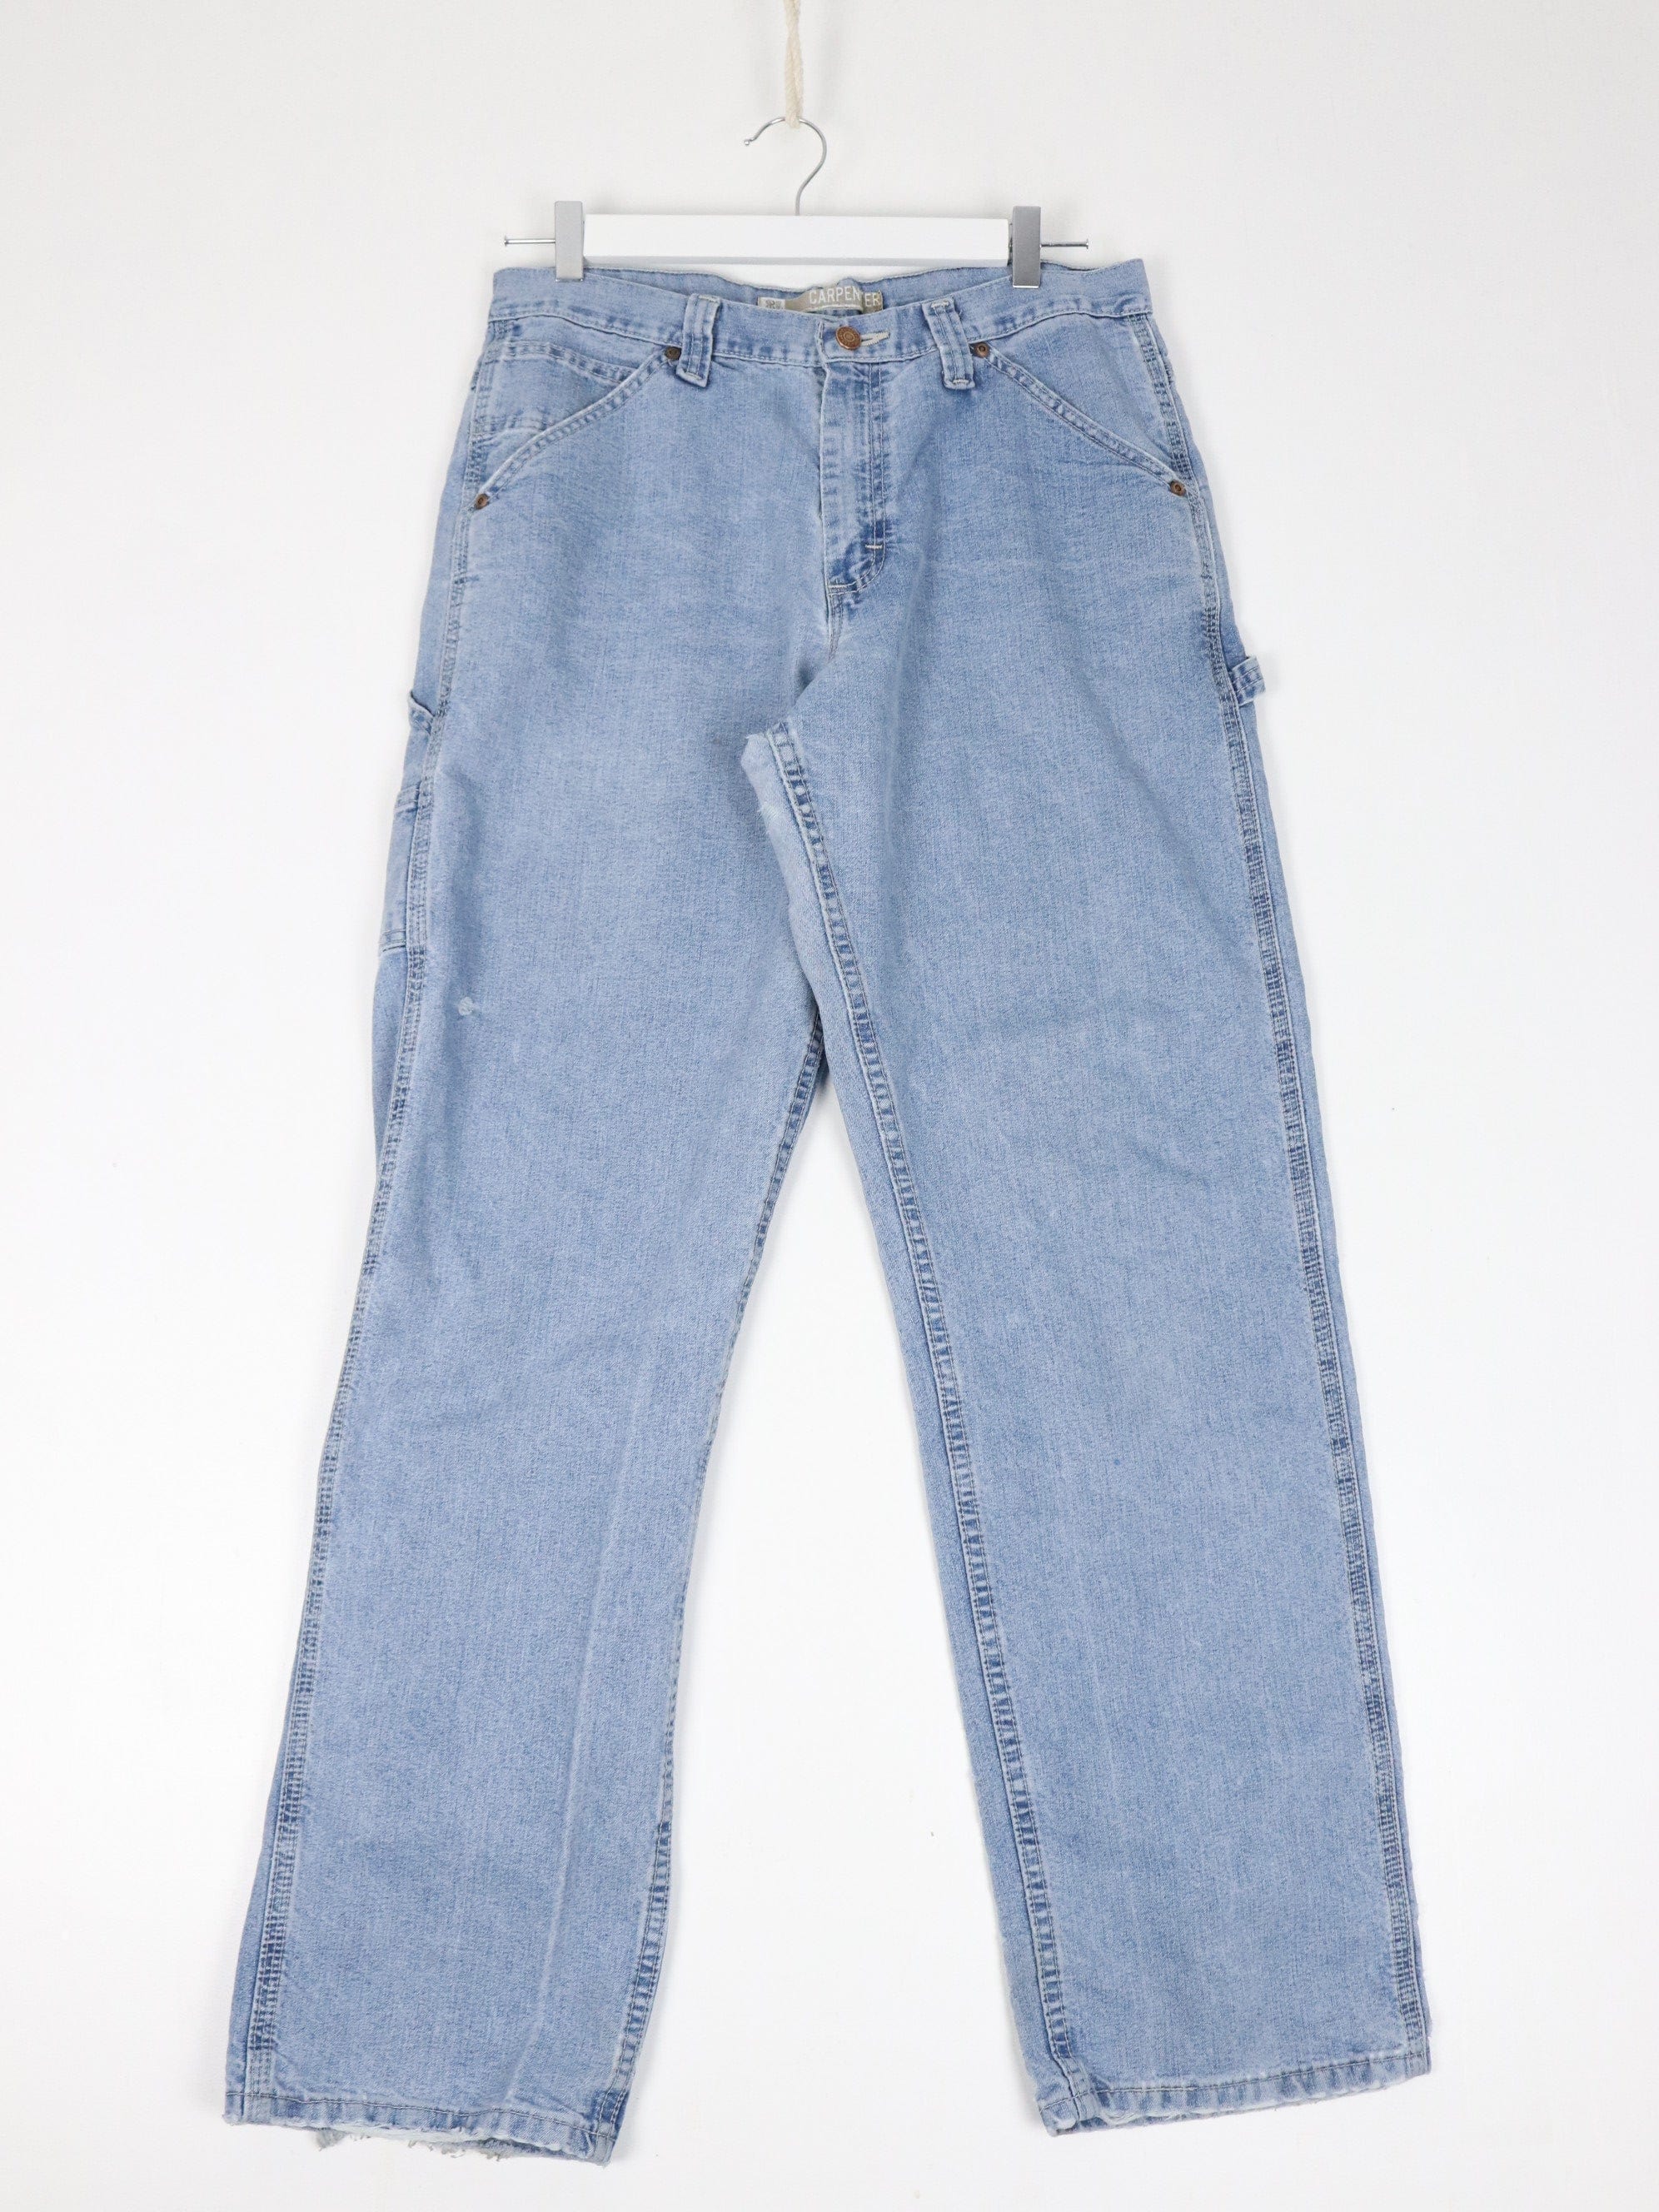 LEE Brooklyn Comfort Men W42 L30 Classic Straight Leg Jeans Denim Pants  Trousers | eBay